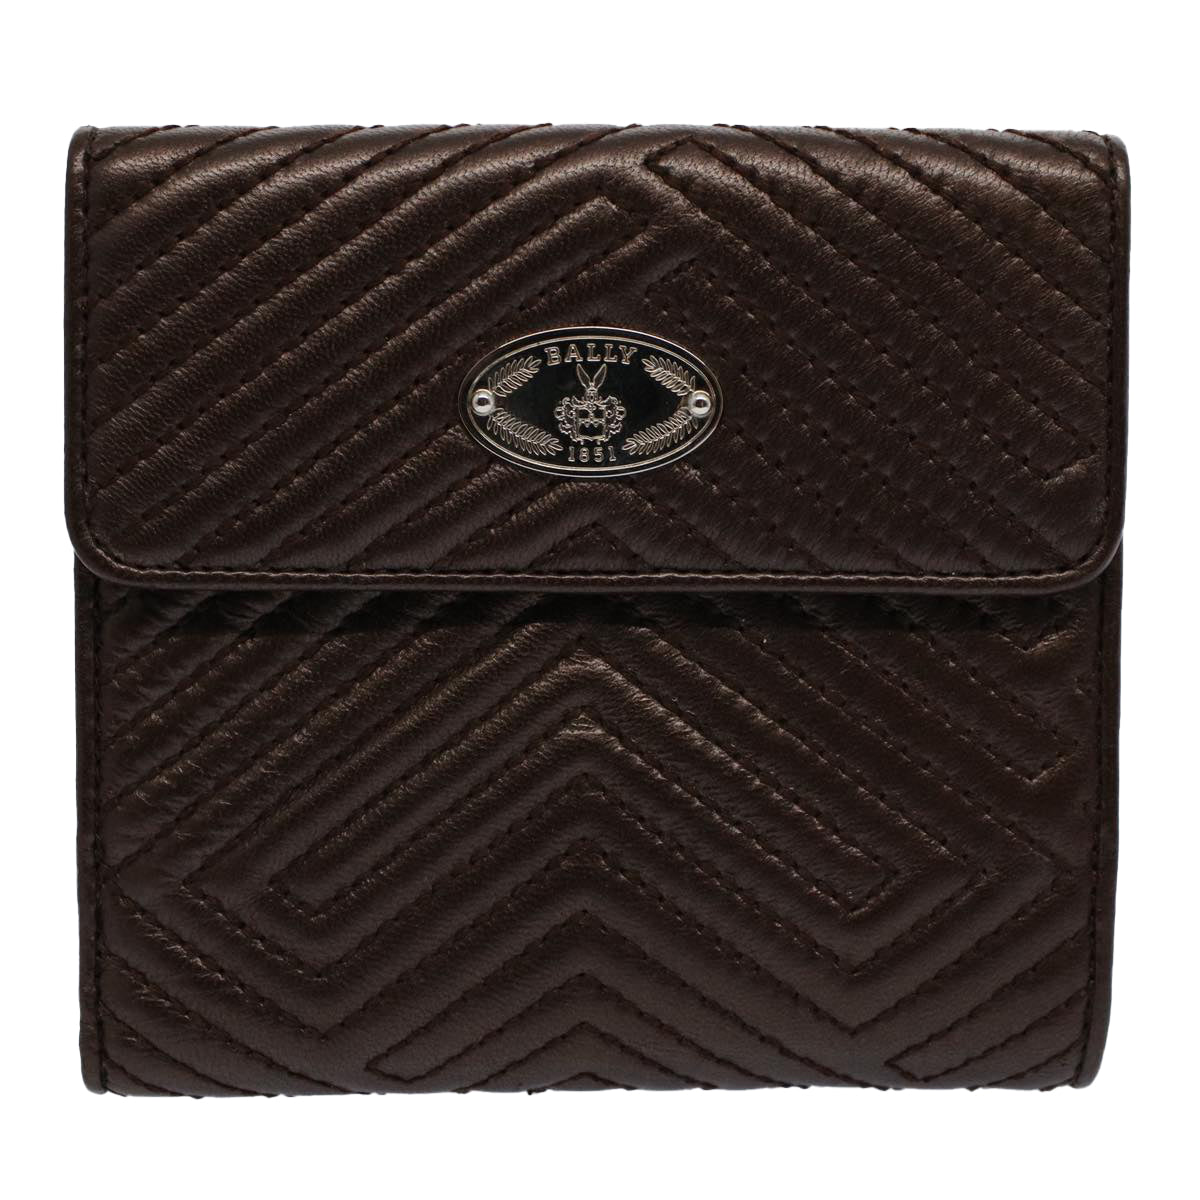 BVLGARI BALLY Cartier Wallet Leather 3Set Black Brown beige Auth ac2488